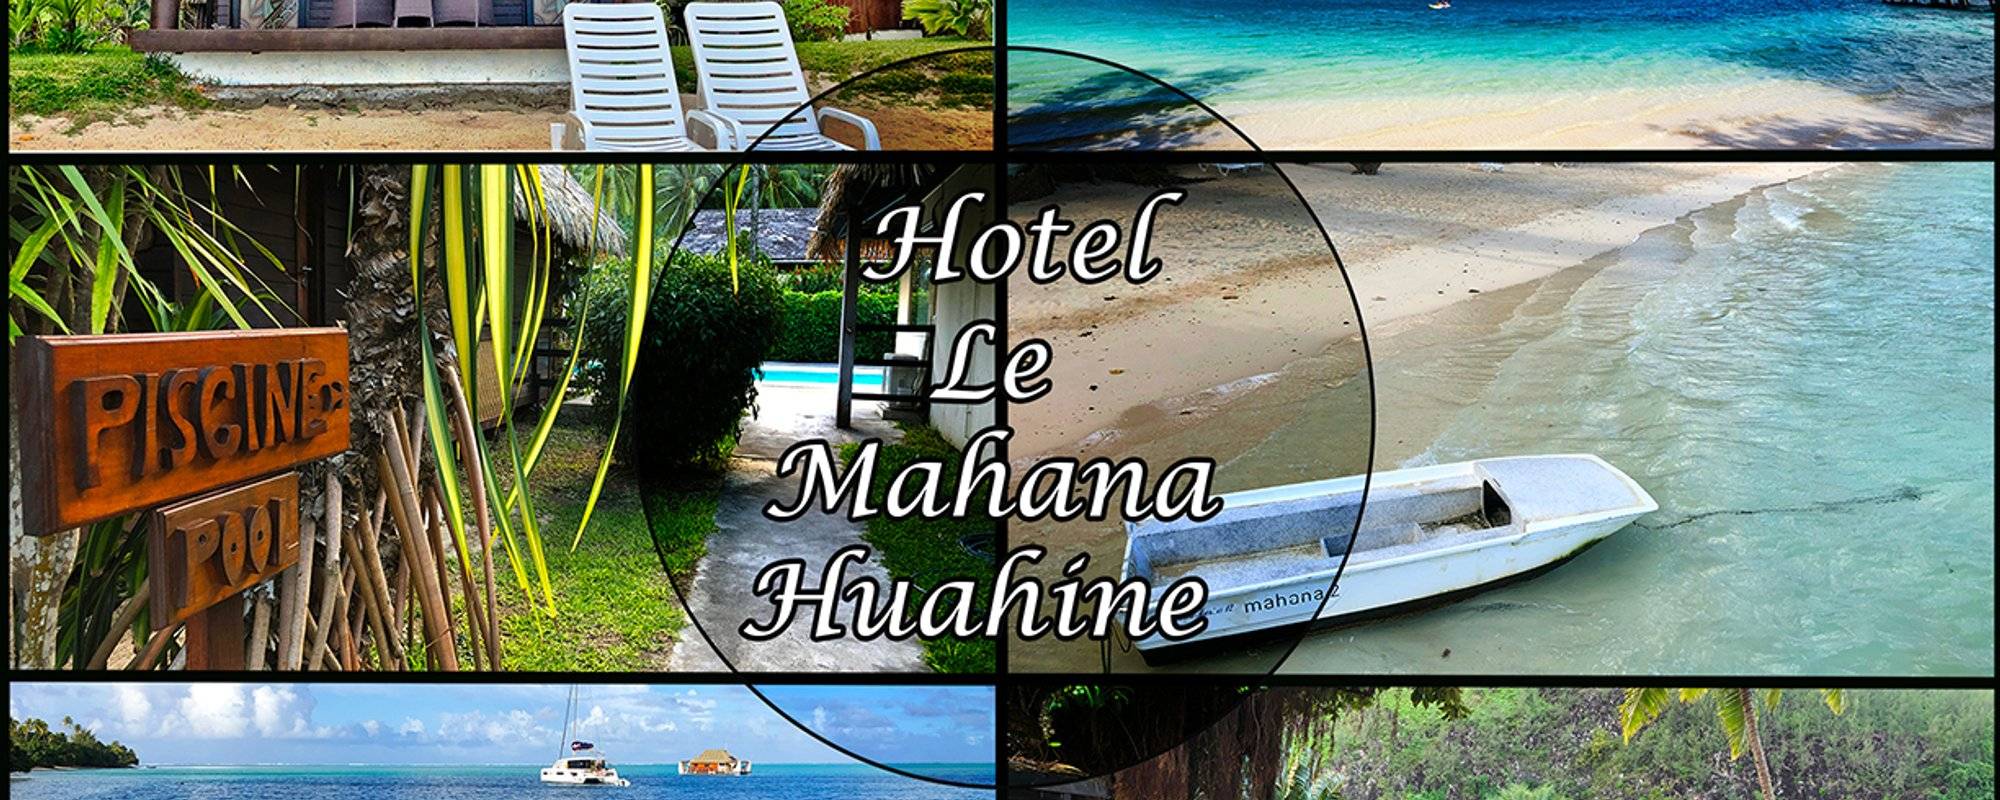 7 Things To Do At Hotel Le Mahana